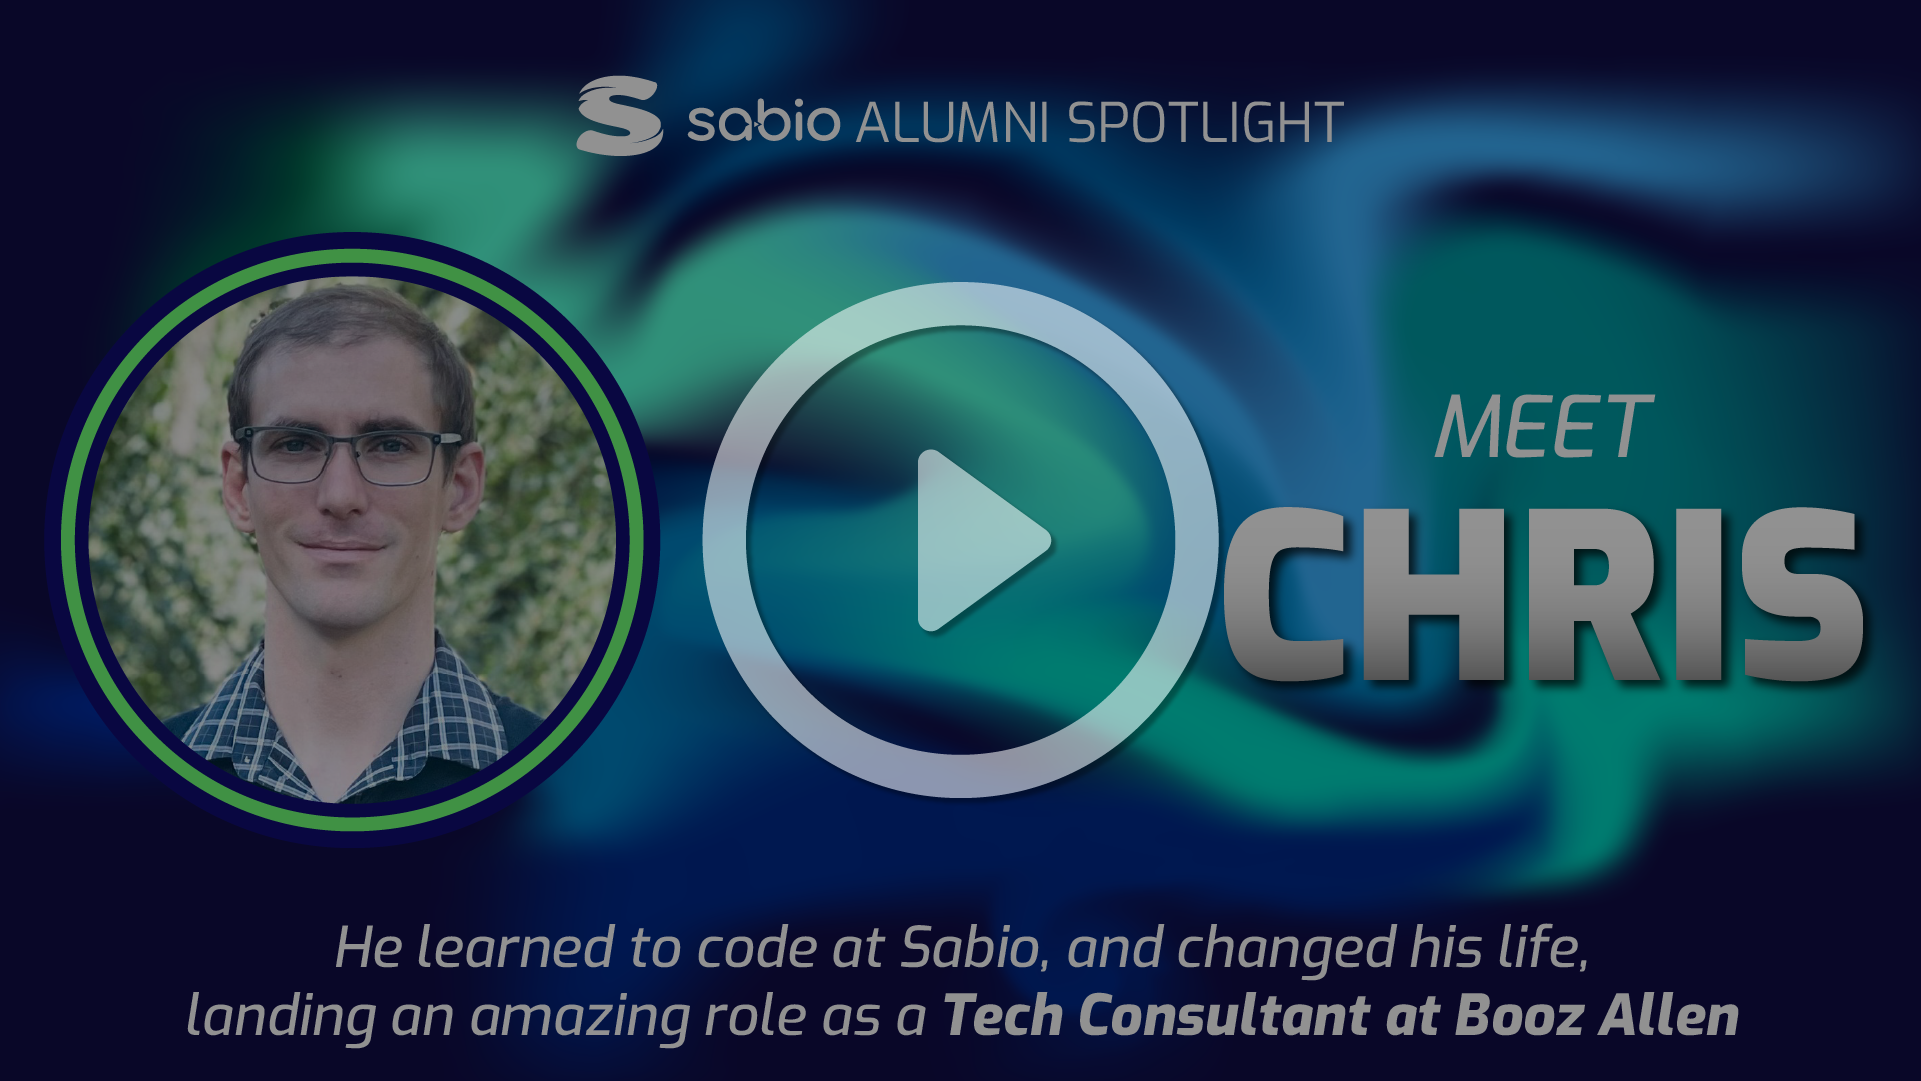 Sabio Alumni Spotlight: Chris. Play symbol overlaid to the image.